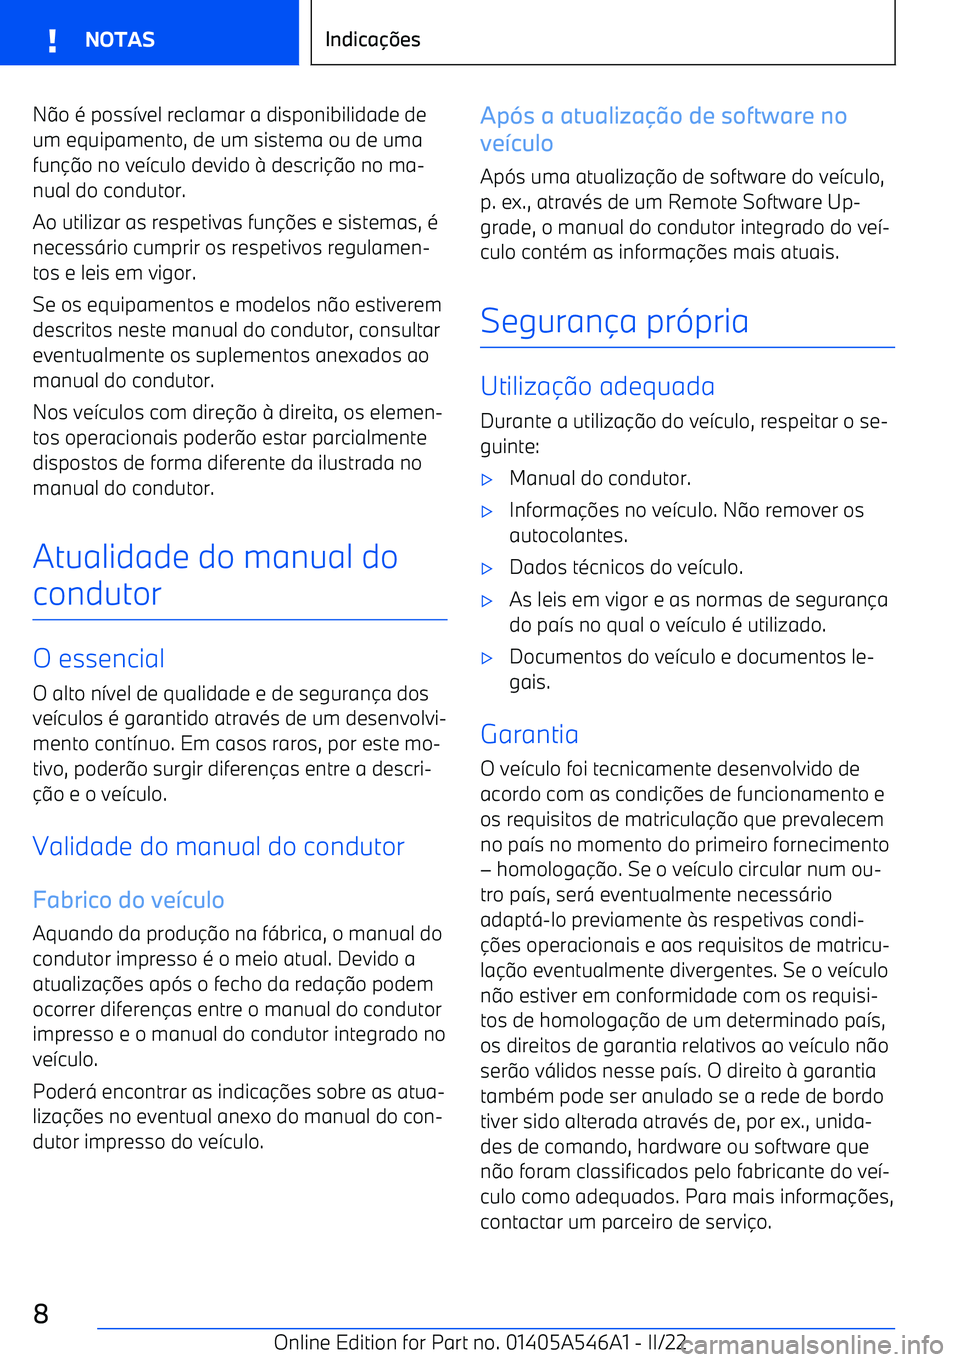 BMW I4 2022  Manual do condutor (in Portuguese) No 